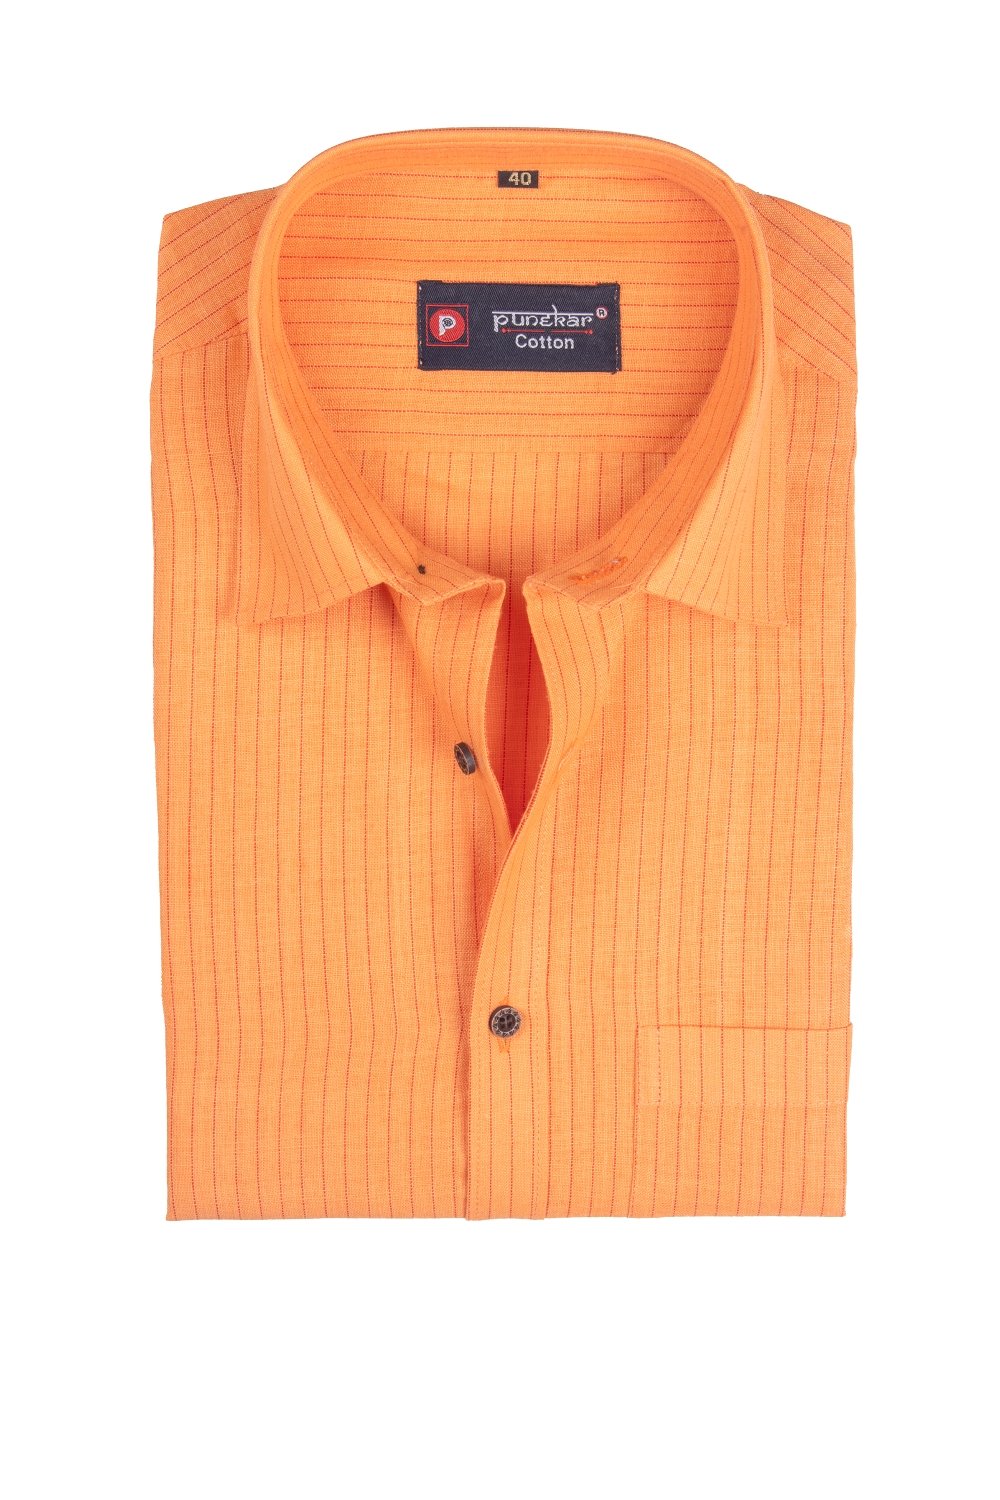 Punekar Cotton Light Orange Color Linning Criss Cross Woven Cotton Shirt for Men&